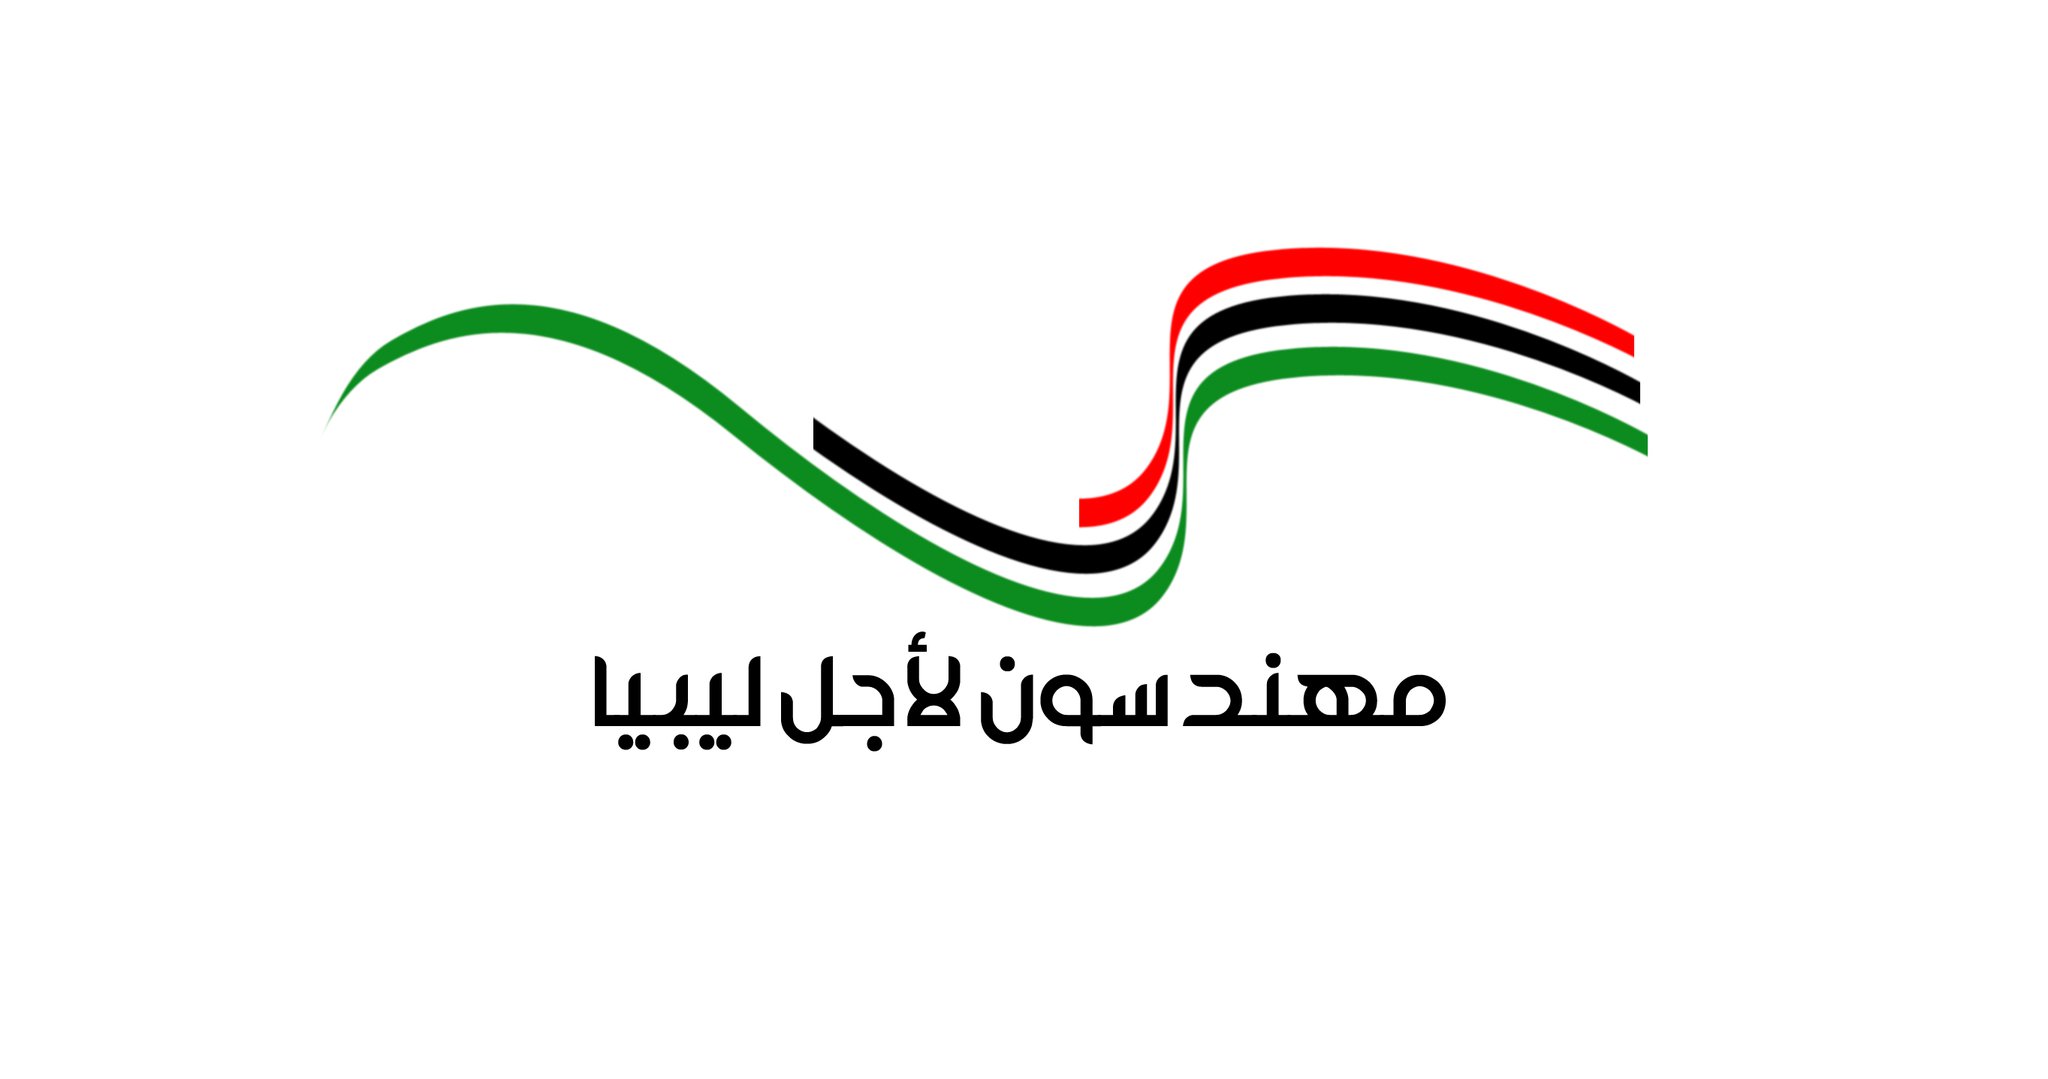 Engineers for Libya logo